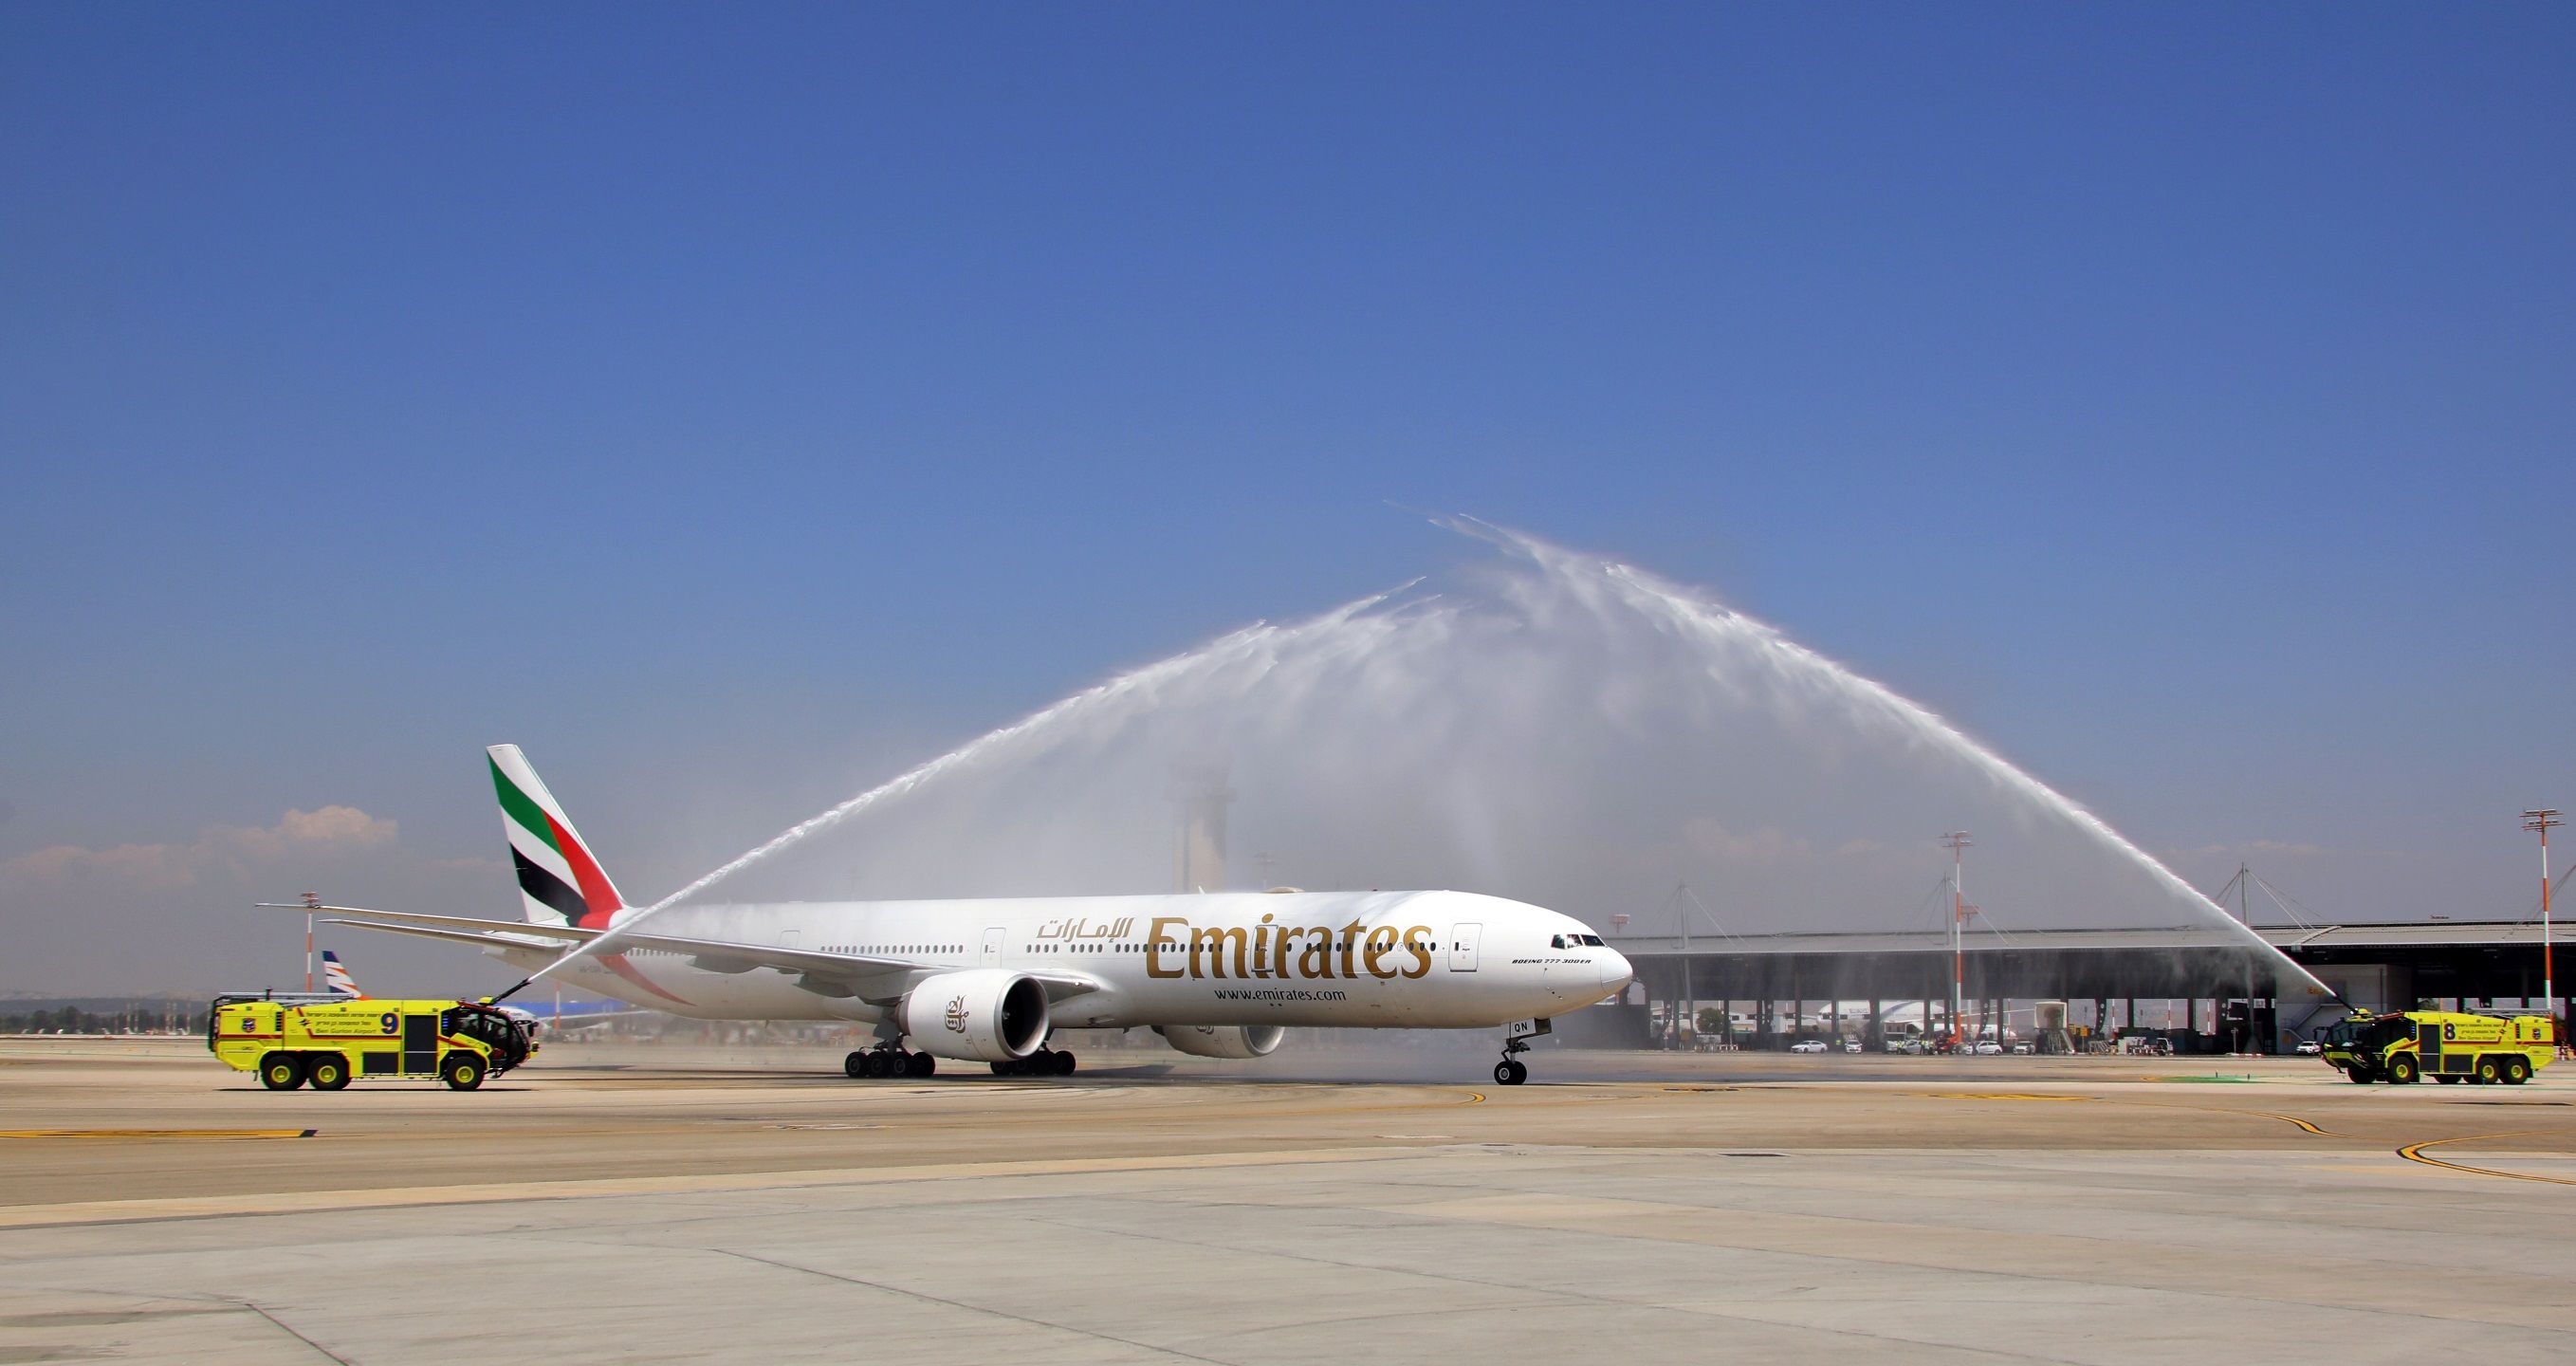 Emirates first flight to Tel Aviv